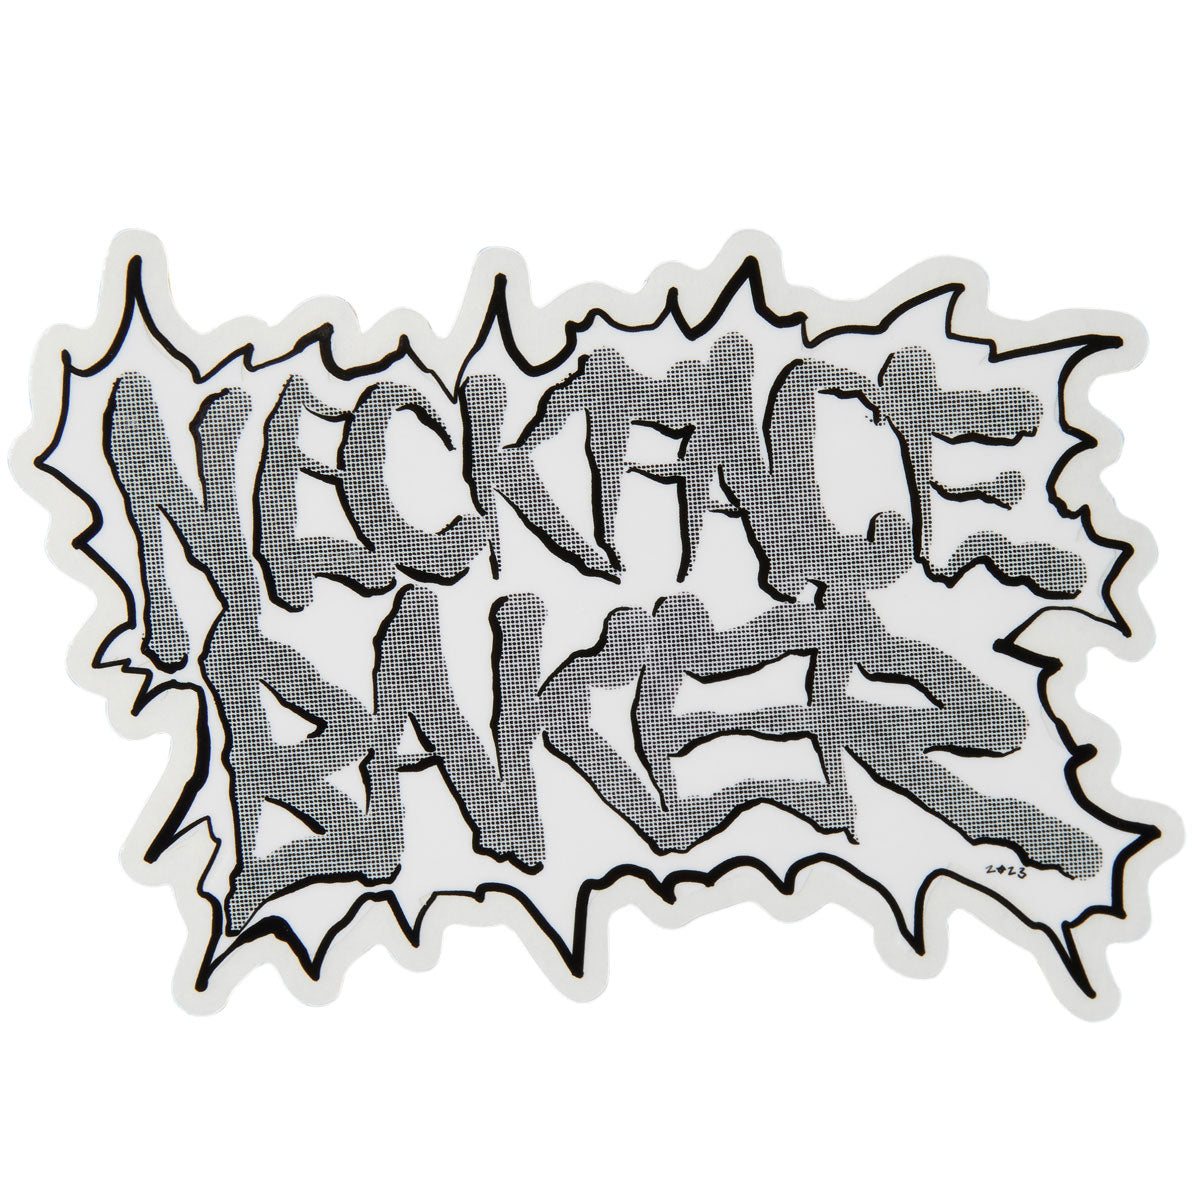 Baker Toxic Rats Sticker - Neckface image 1